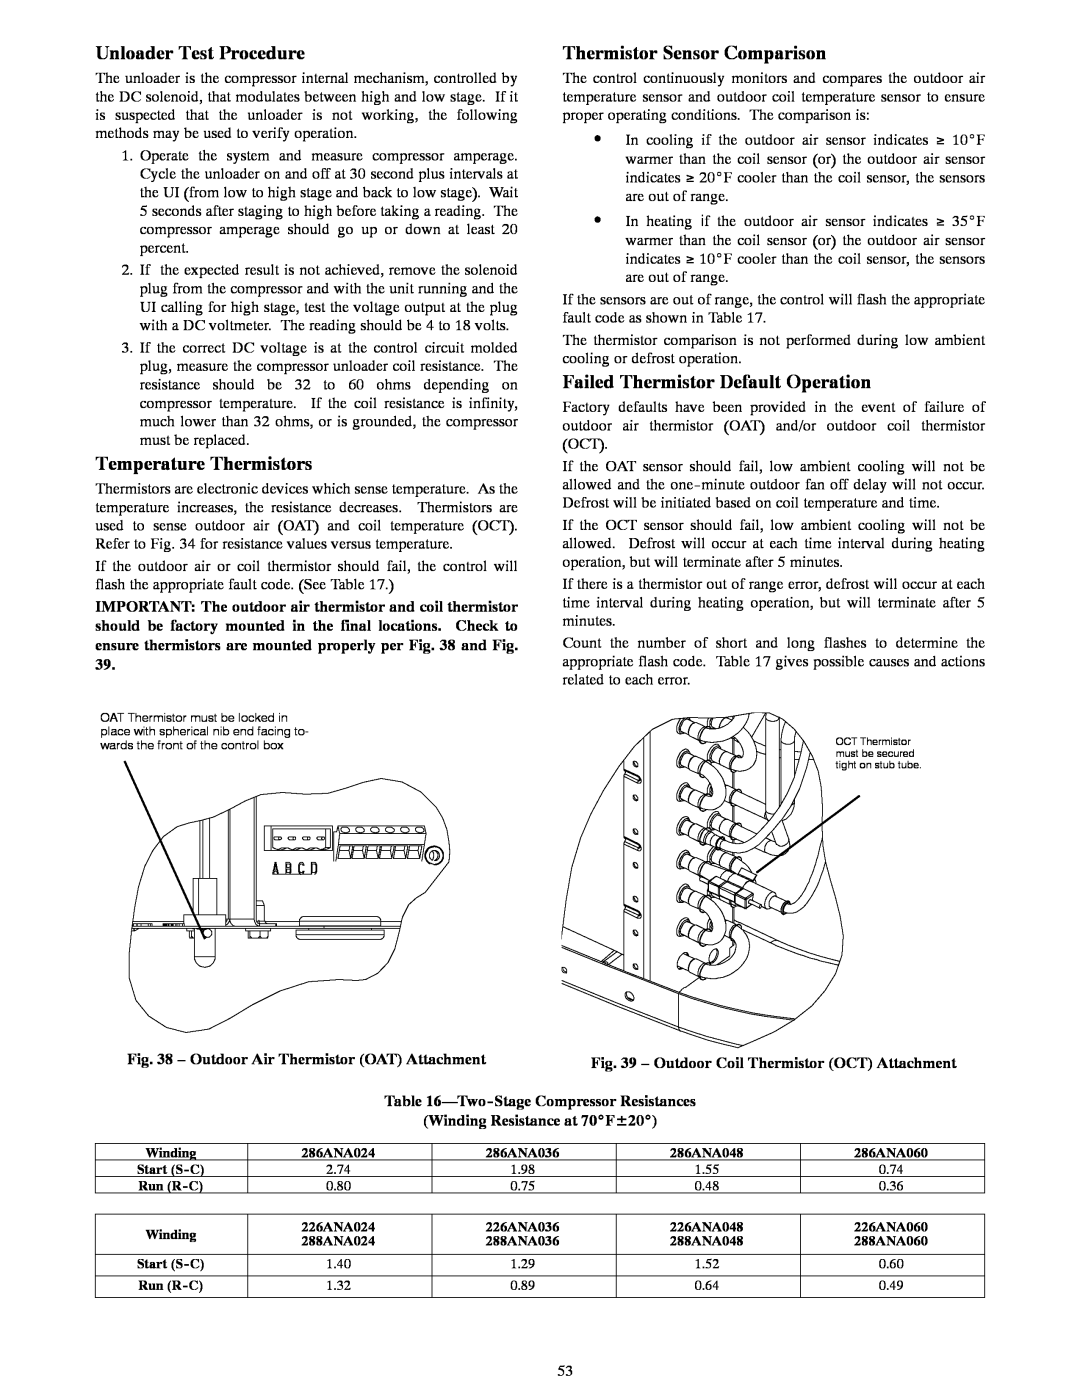 Bryant R-22 Unloader Test Procedure, Temperature Thermistors, Thermistor Sensor Comparison, Winding Resistance at 70_F±20_ 